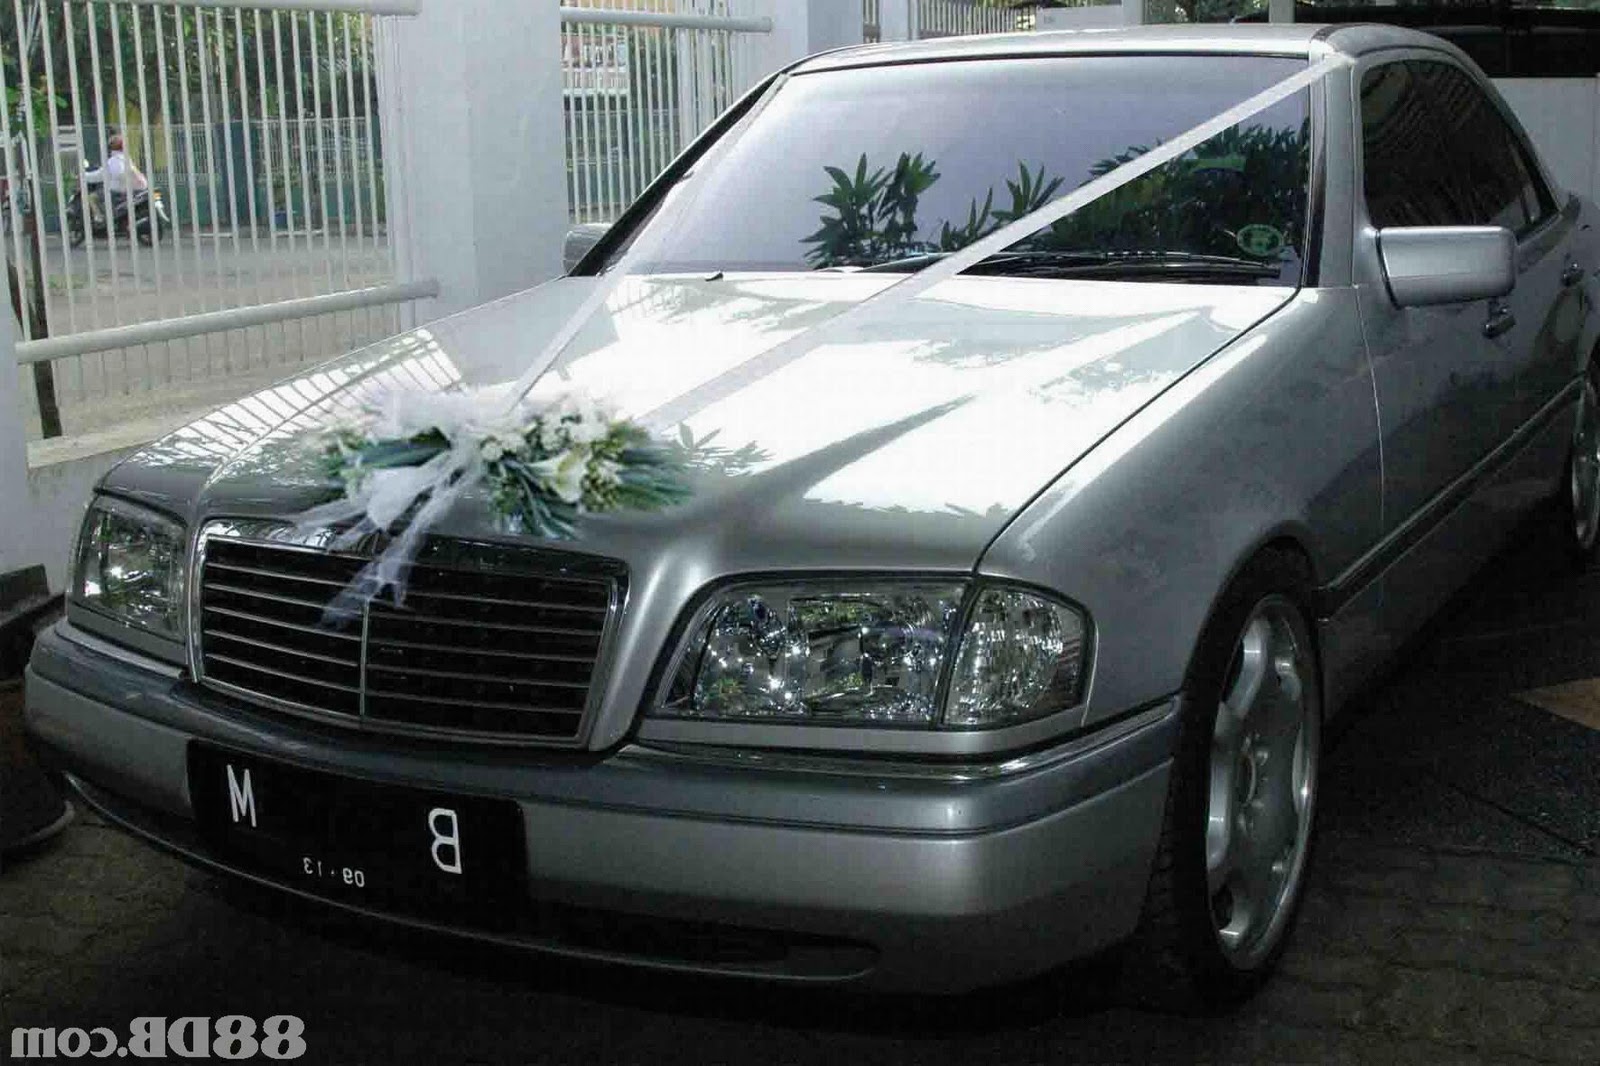 Sewa Mobil Pengantin  Wedding Car Rent & Rental: Cheap Wedding Car Jakarta